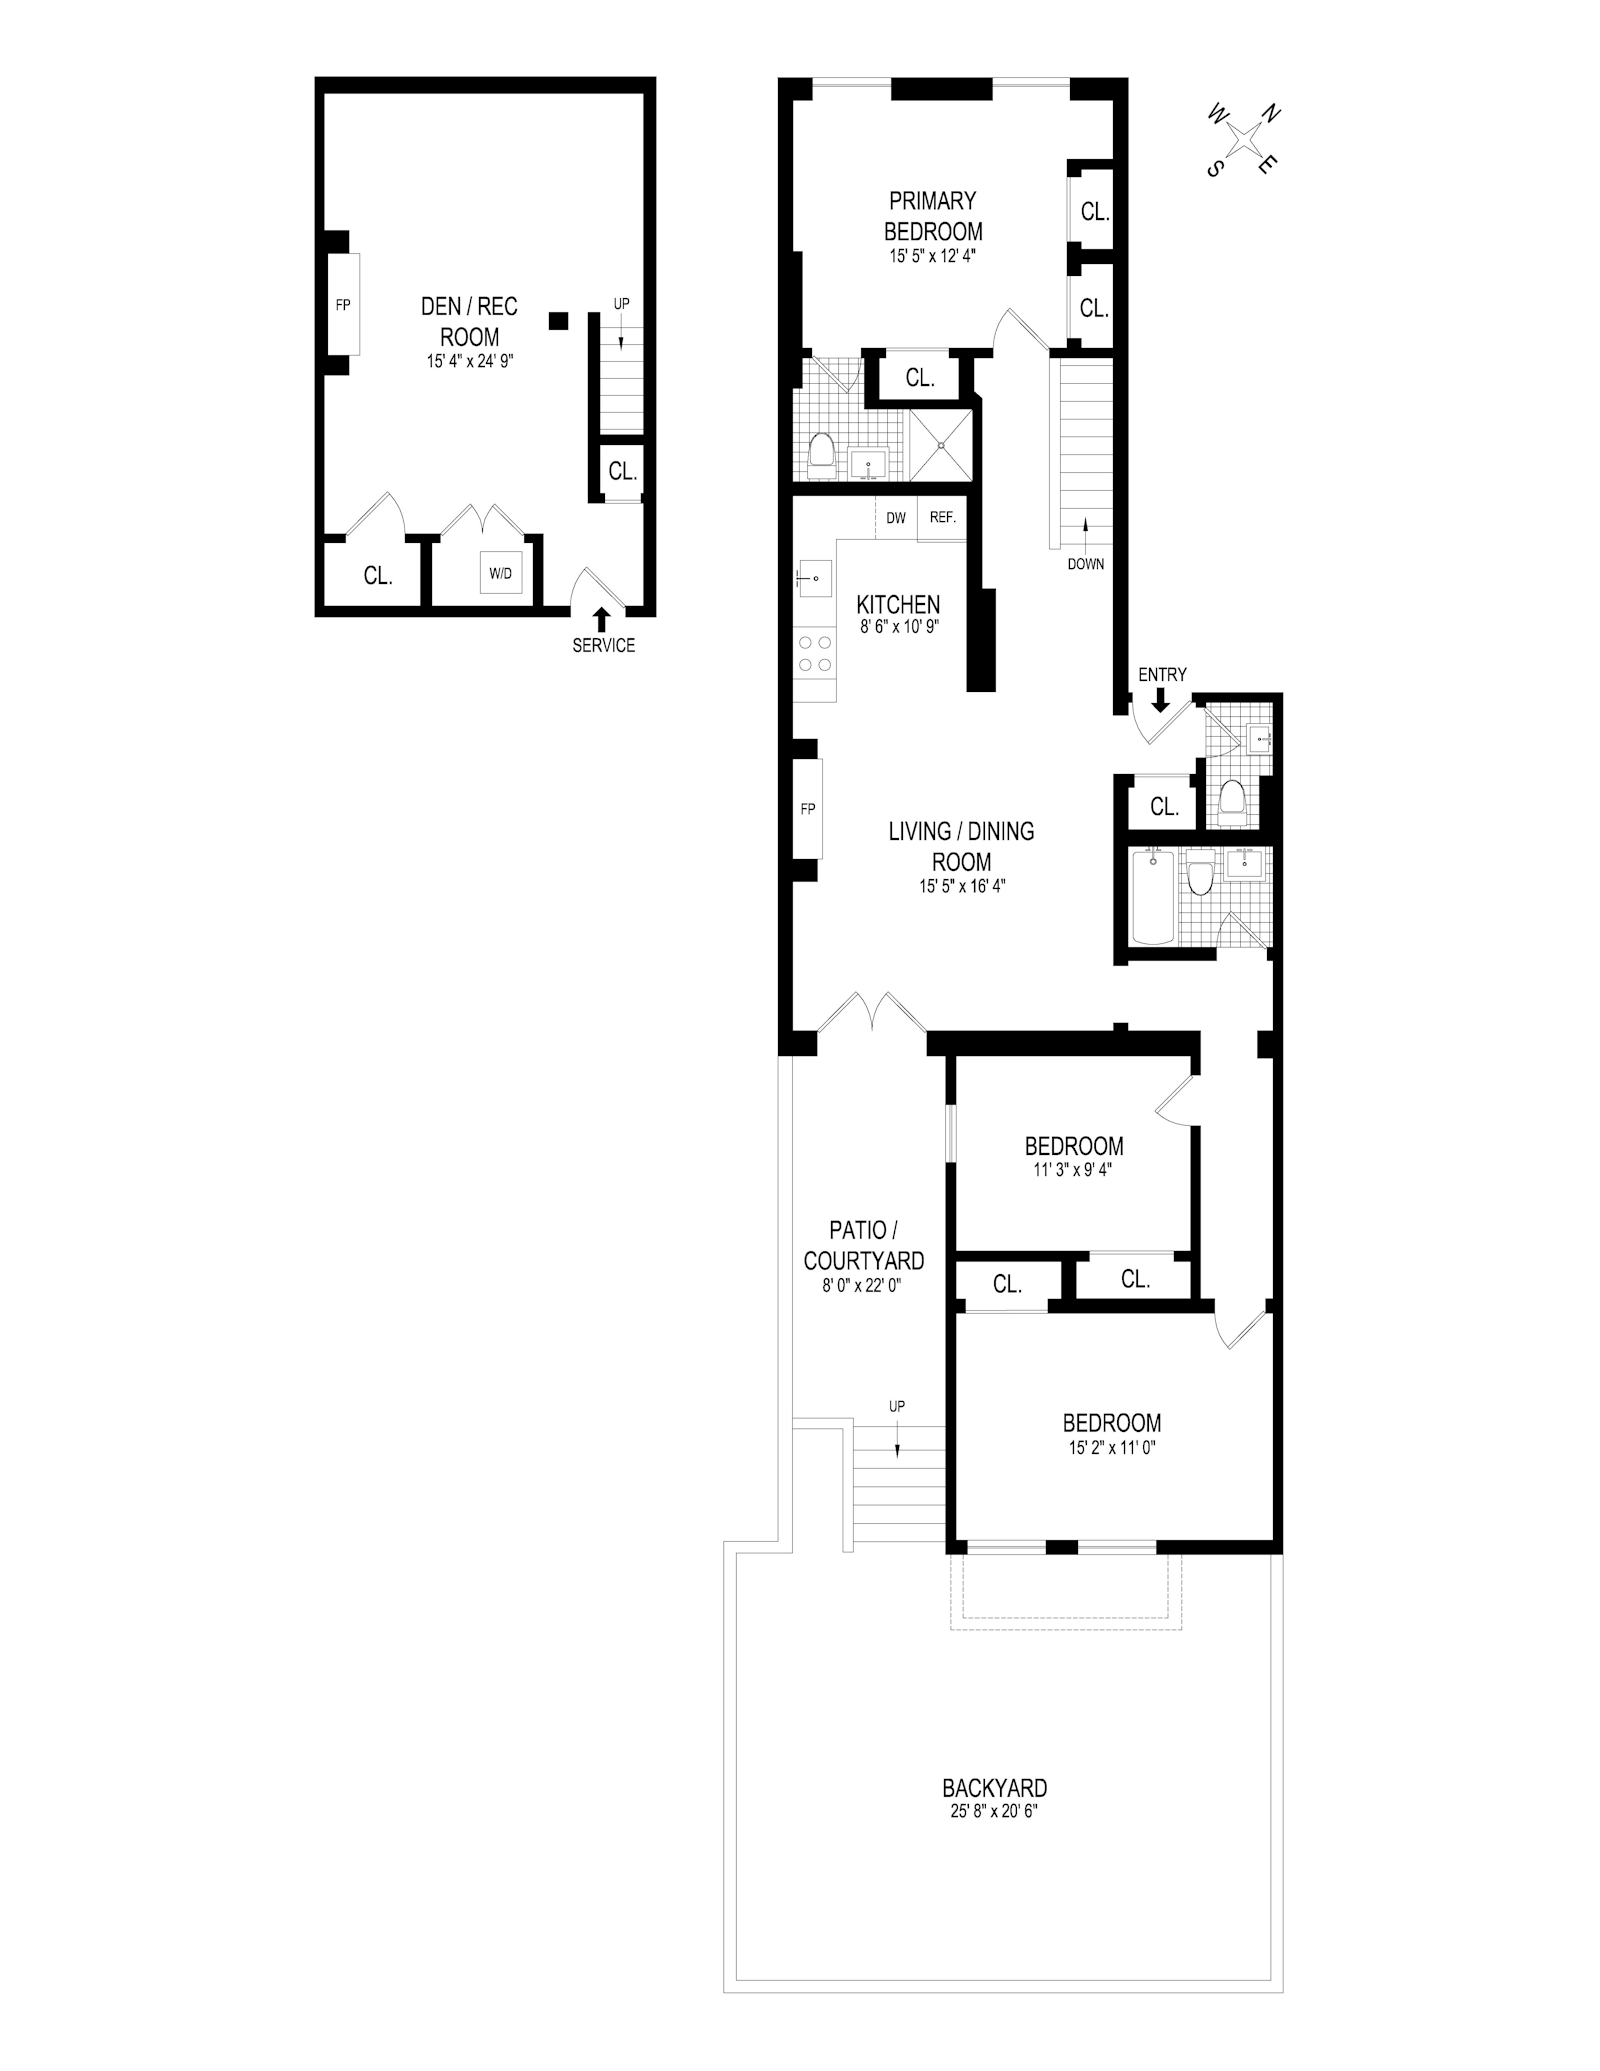 Floorplan for 419 Clinton Street